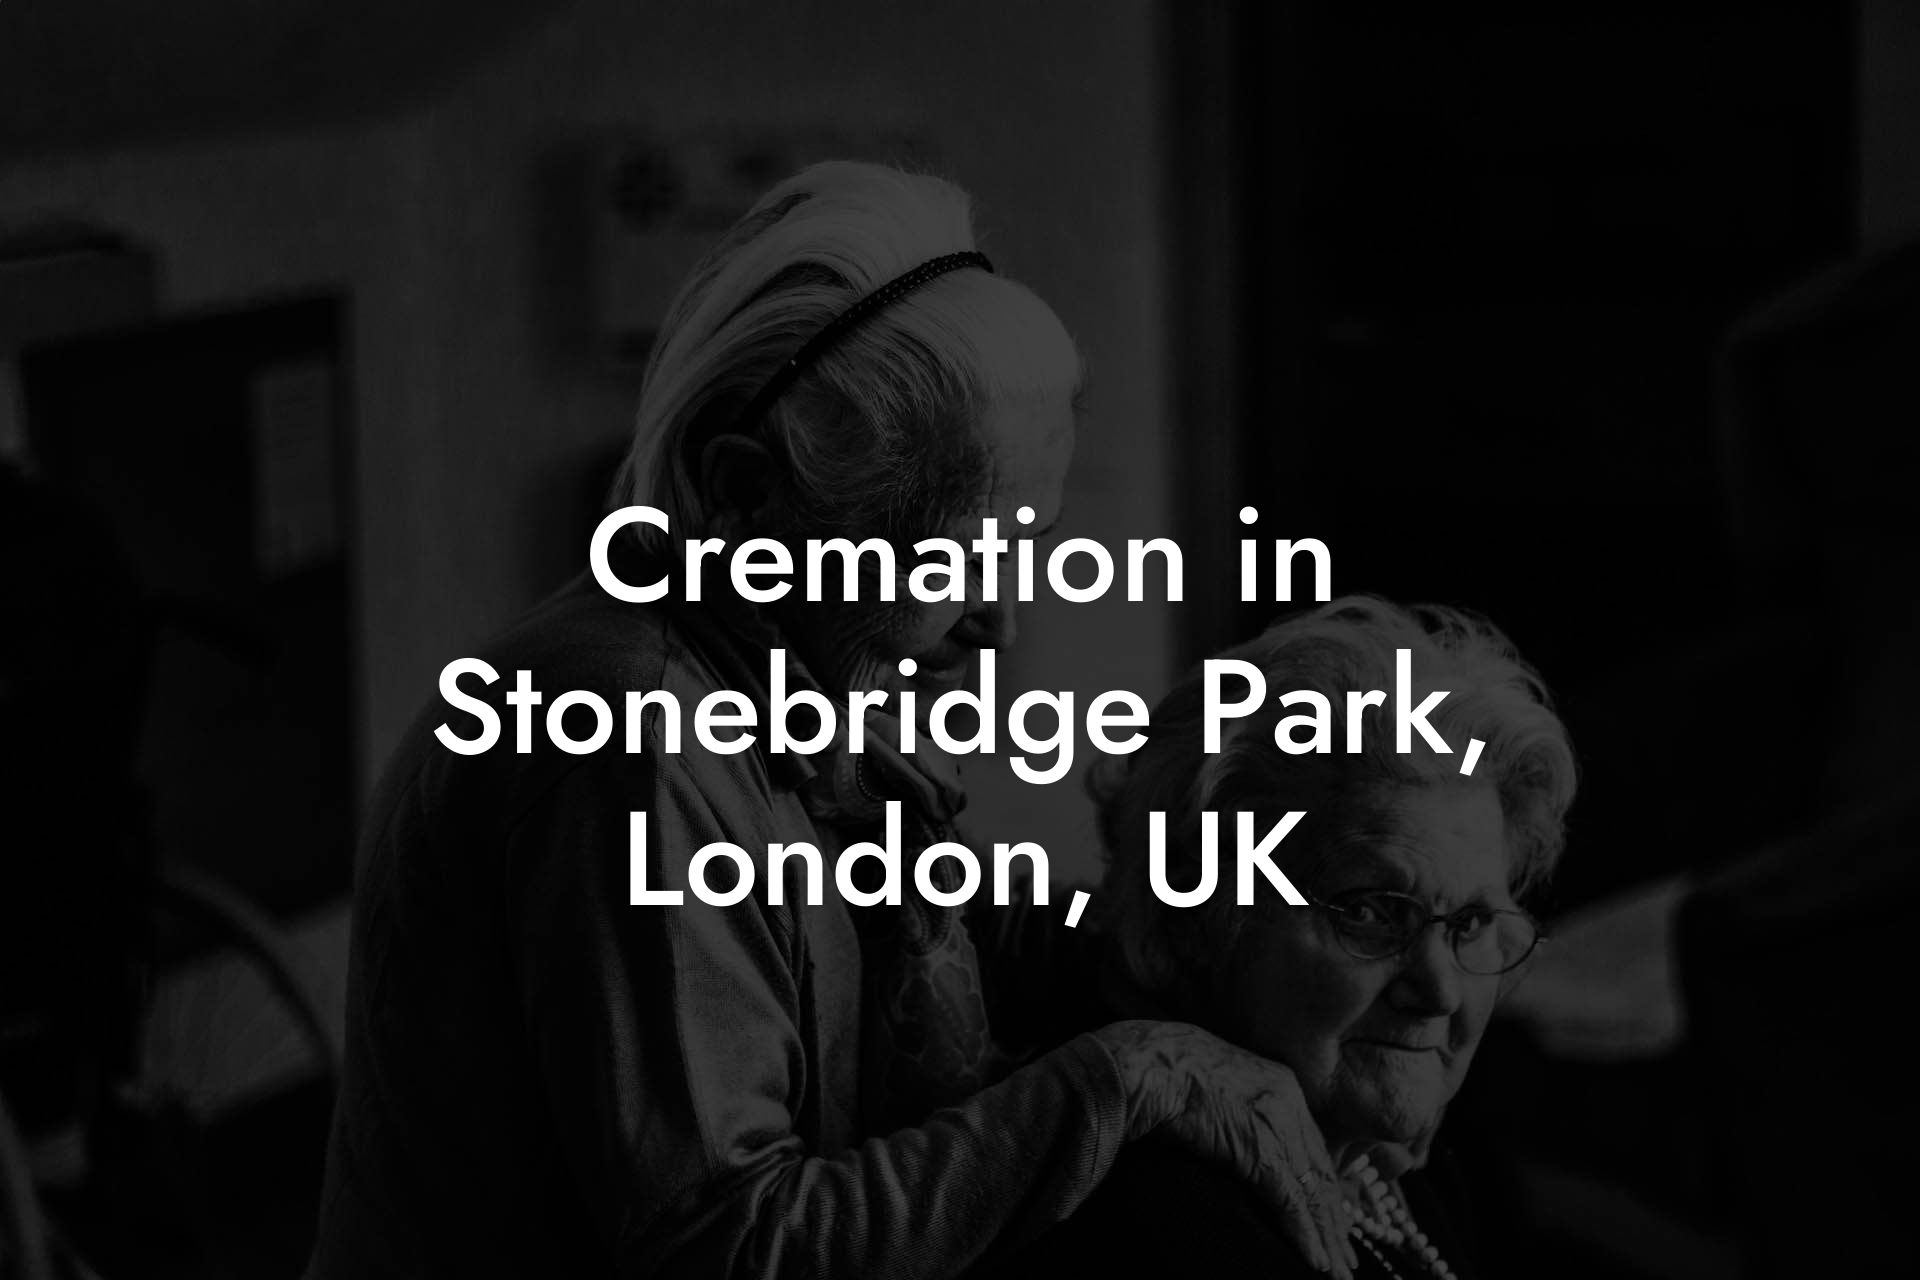 Cremation in Stonebridge Park, London, UK